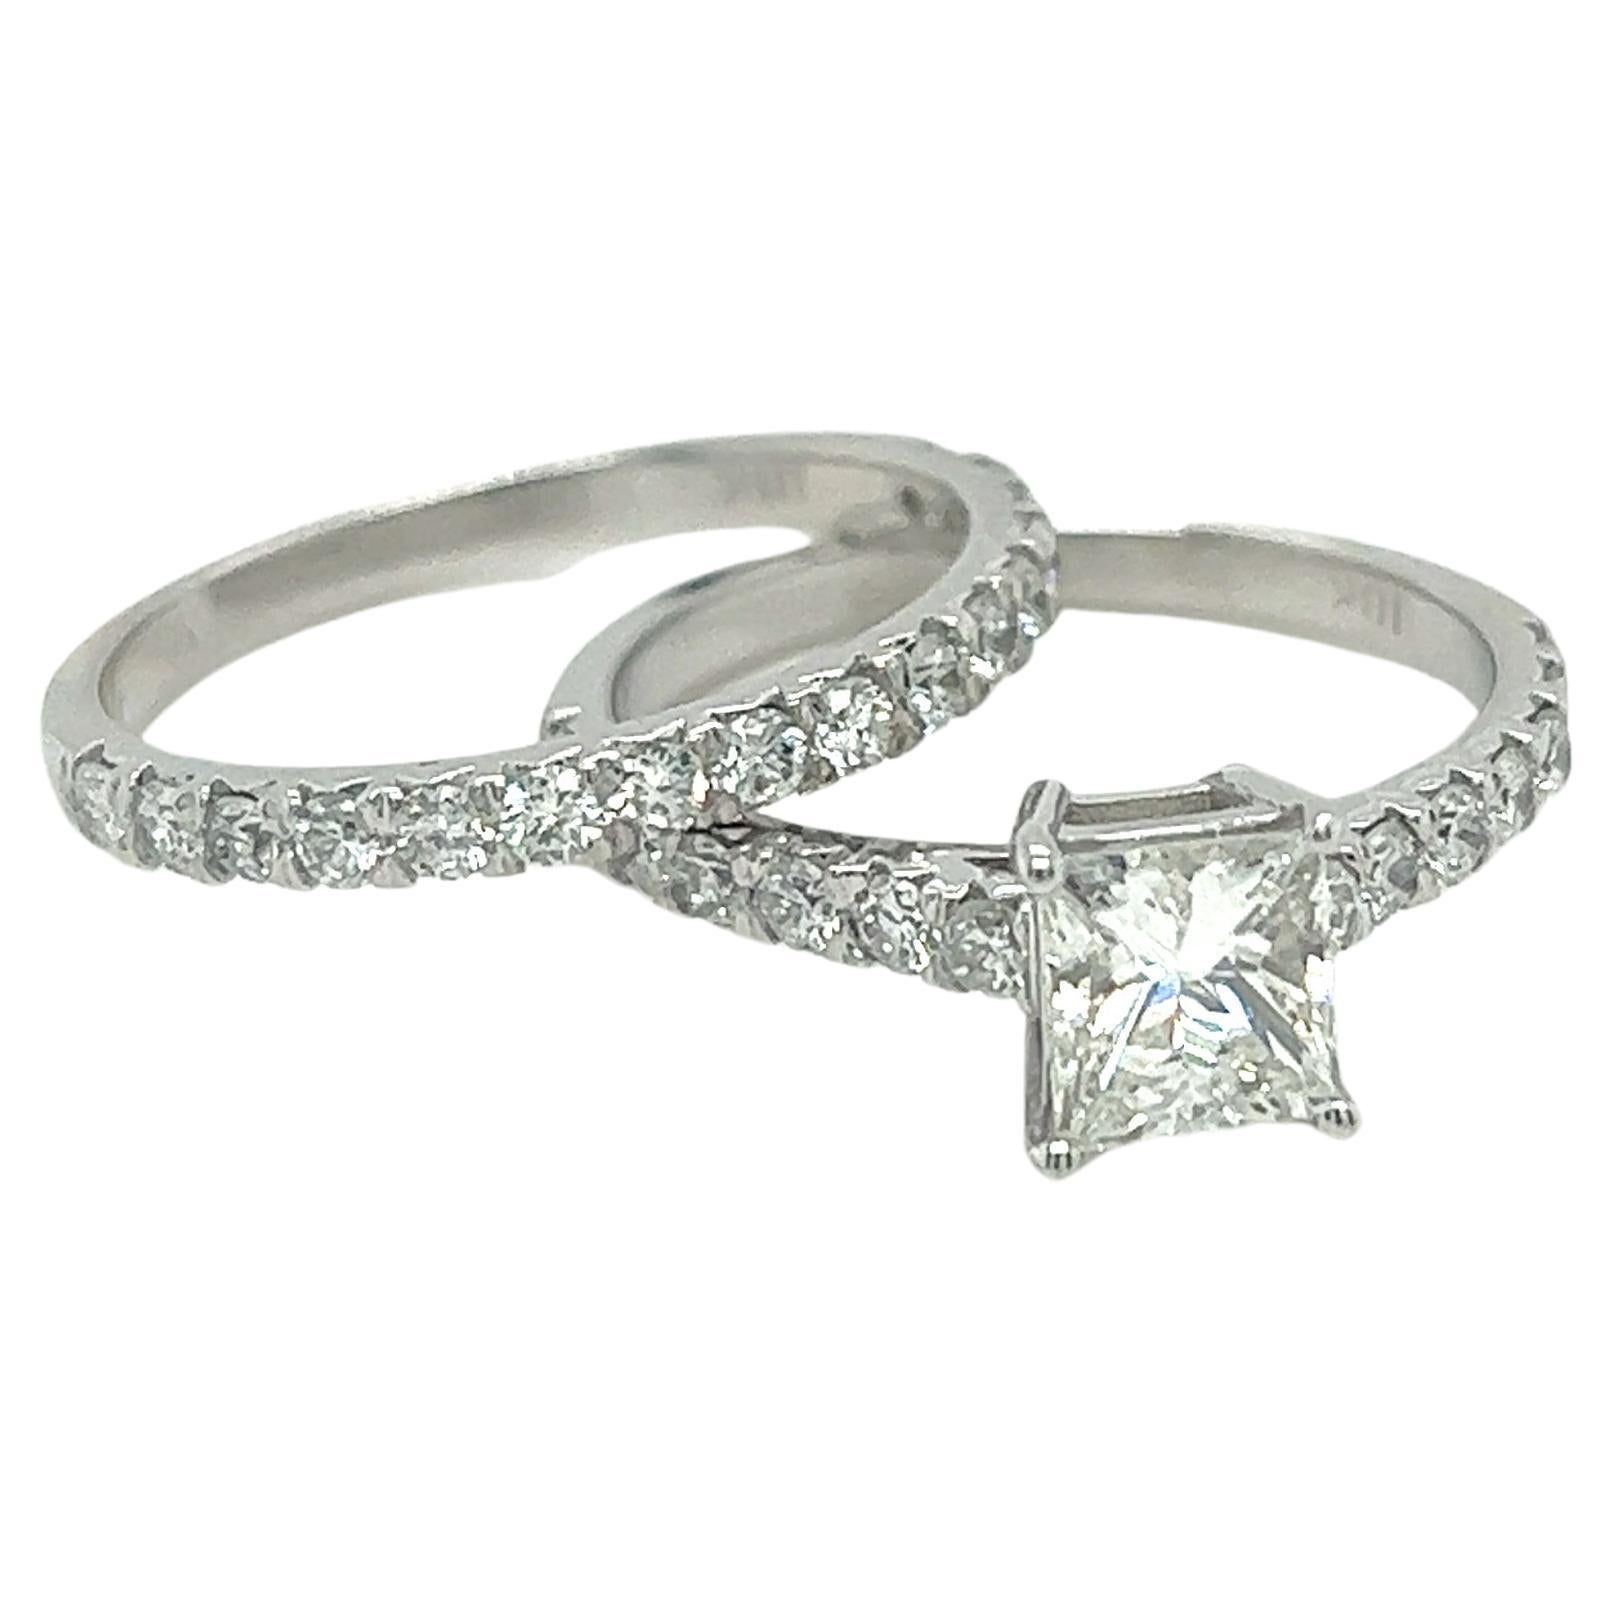 1.90ct Princess Cut Diamond Engagement Ring with Band Set